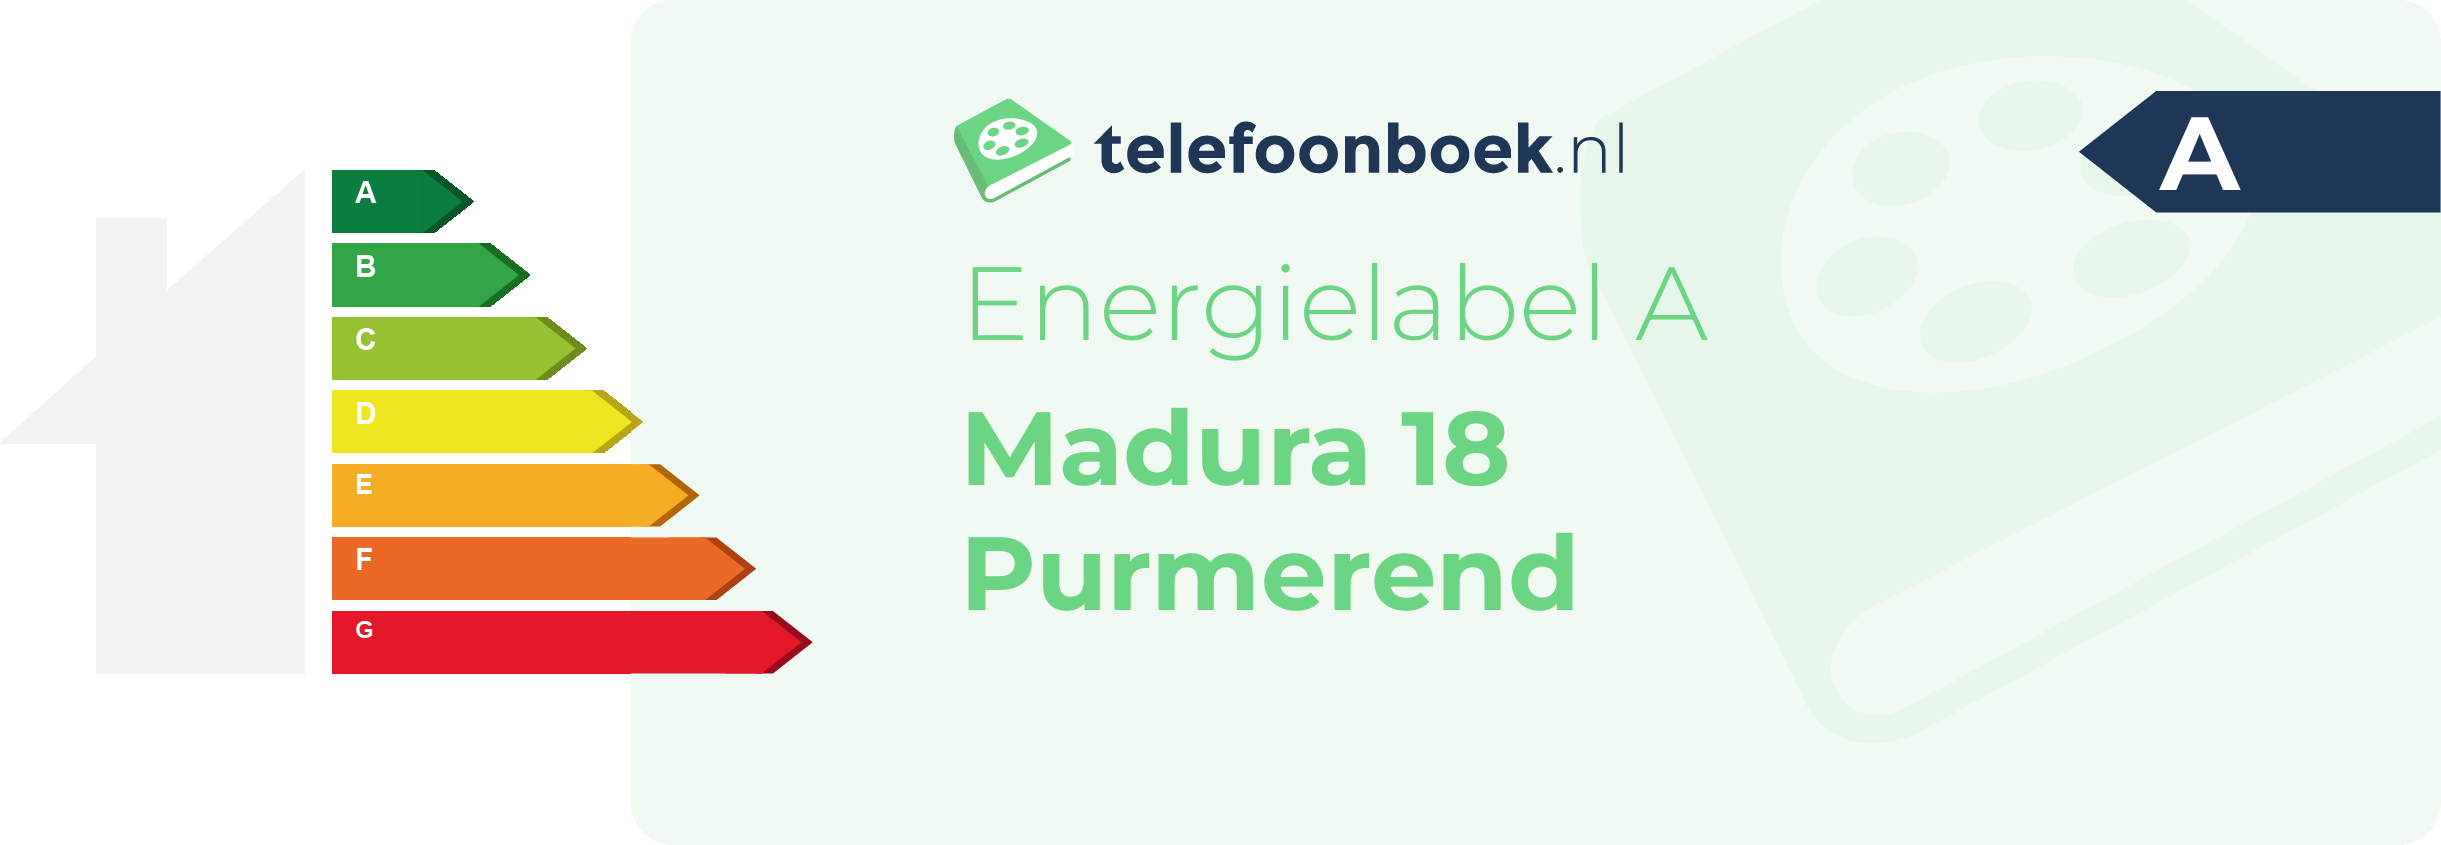 Energielabel Madura 18 Purmerend